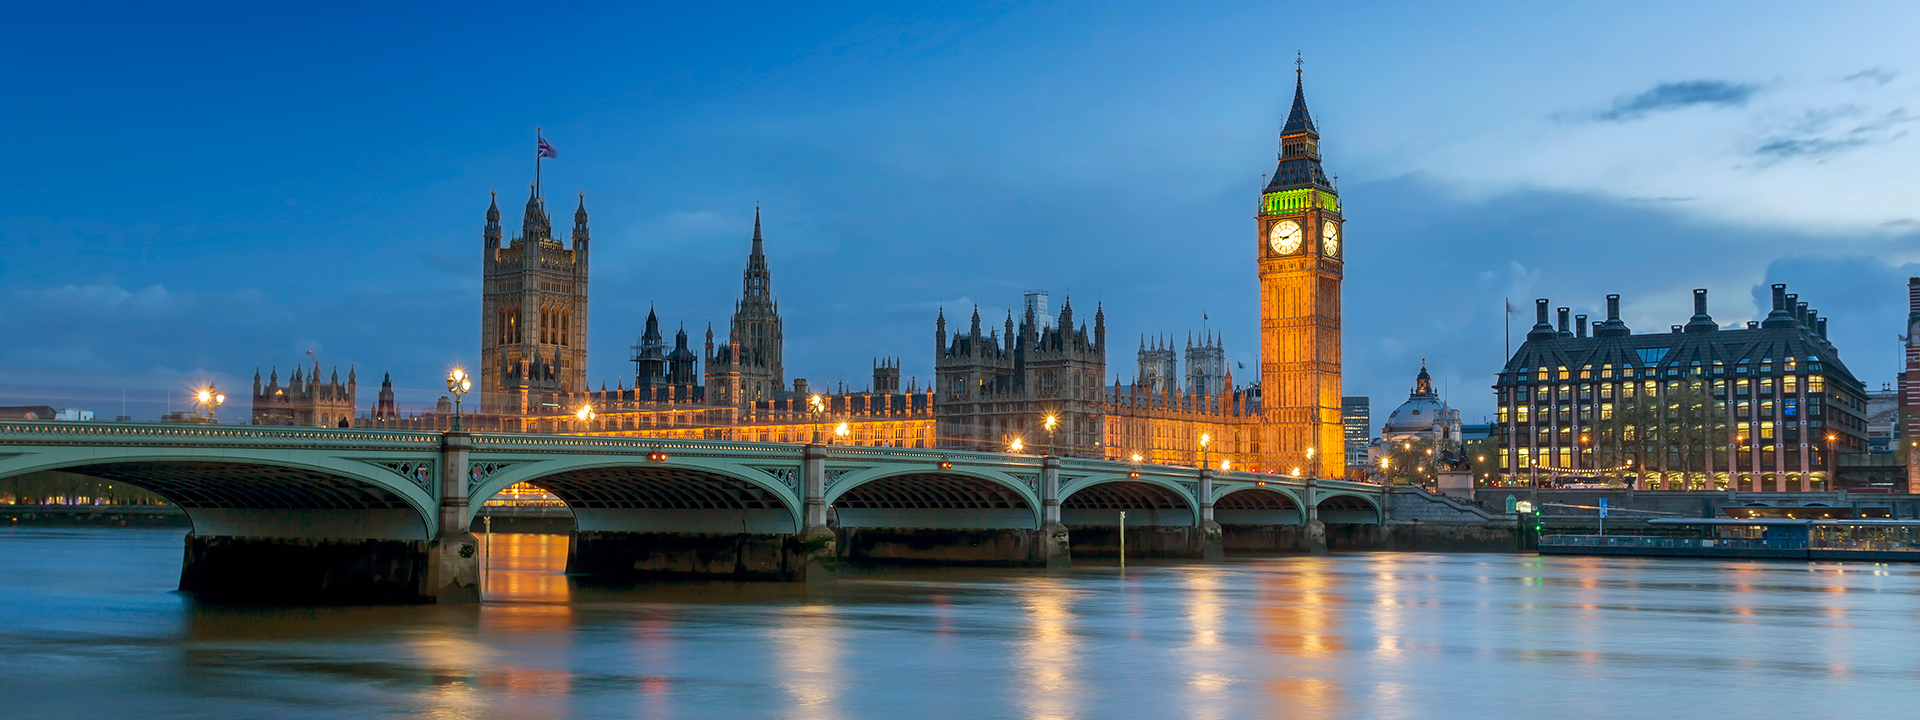 Global Reach - Londons's Westminster Bridge and Big Ben